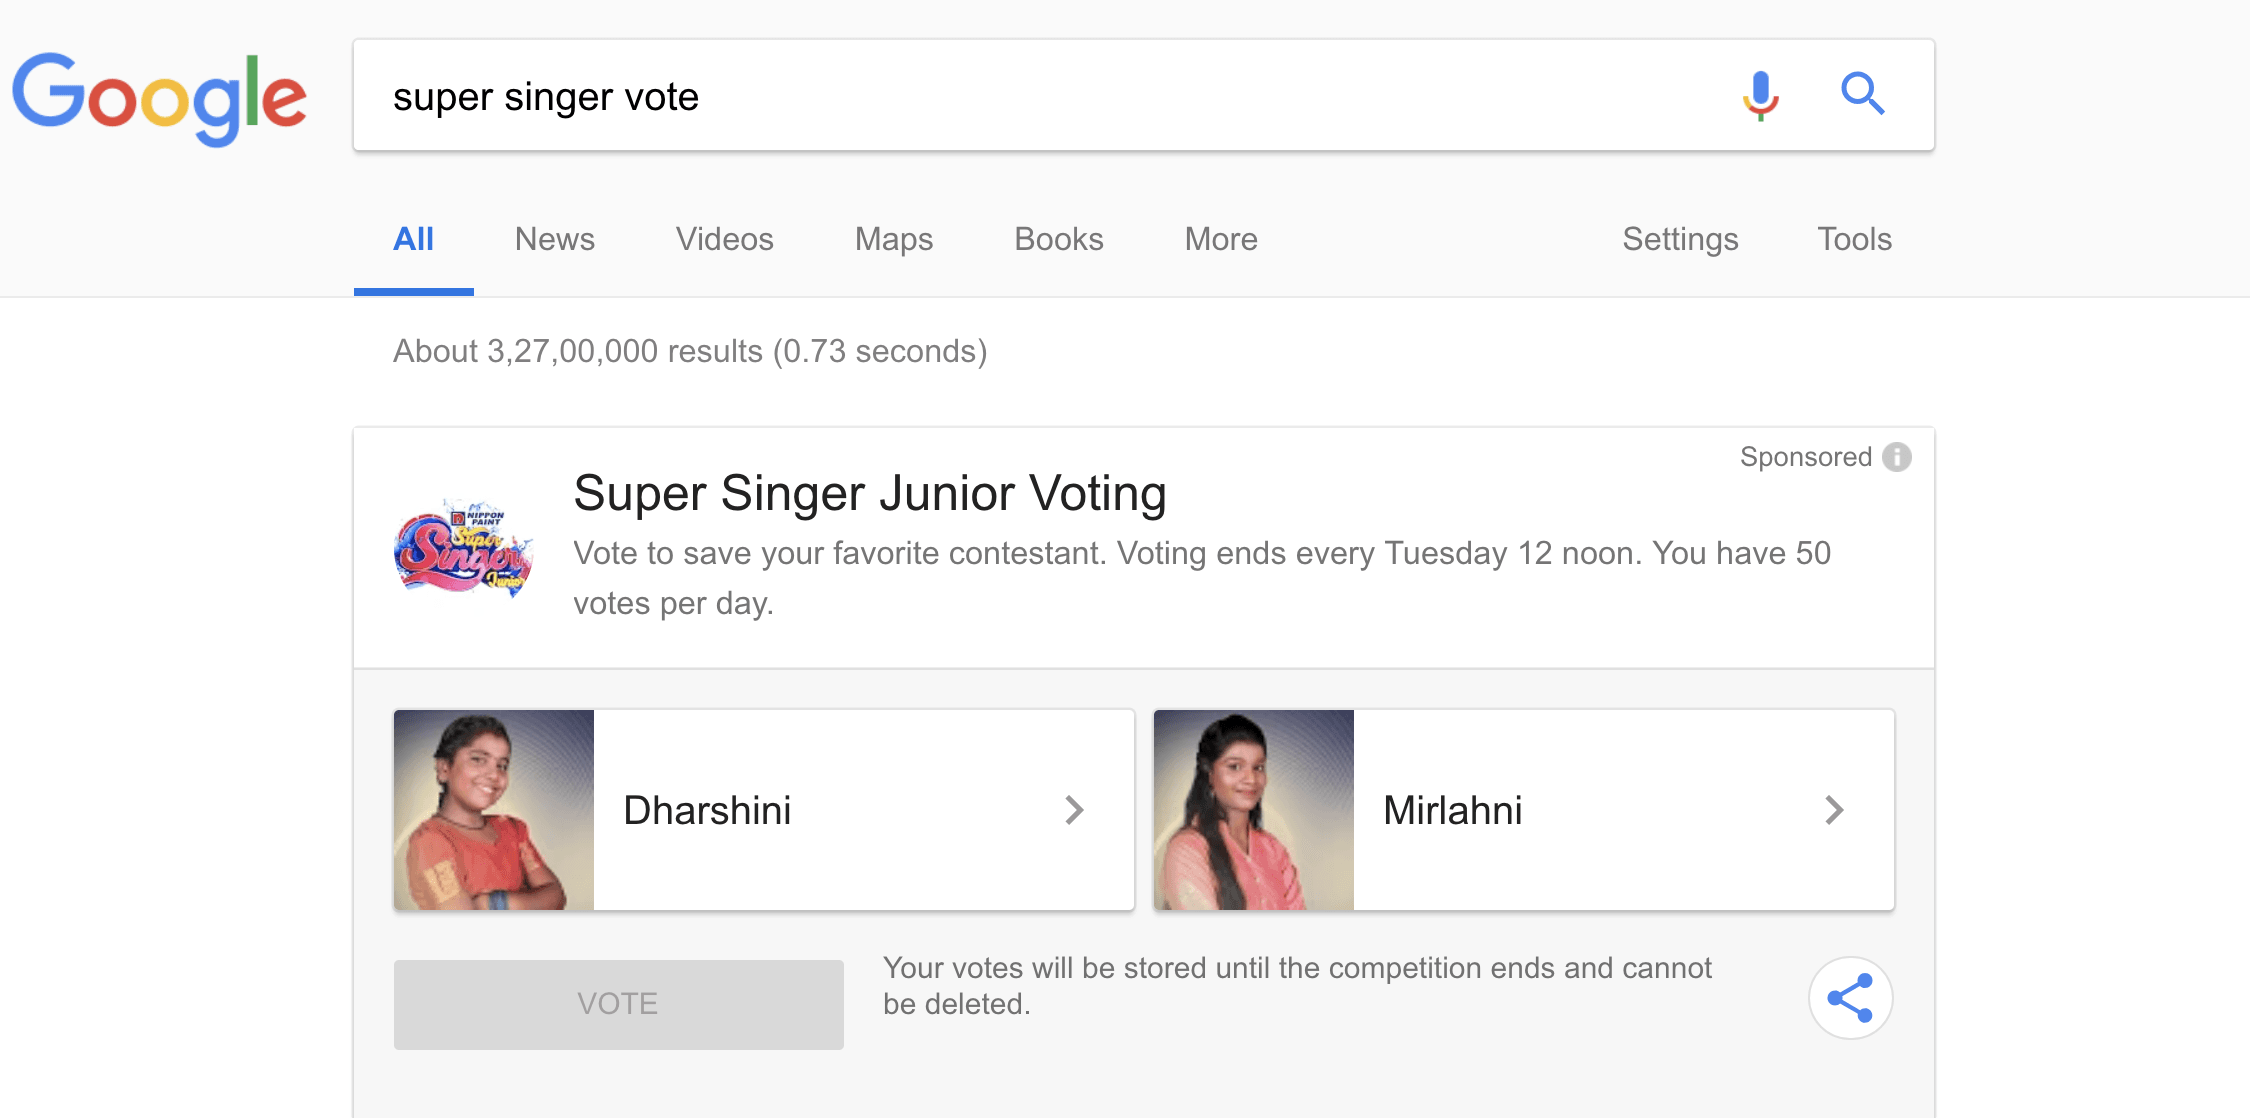 Super Singer Vote